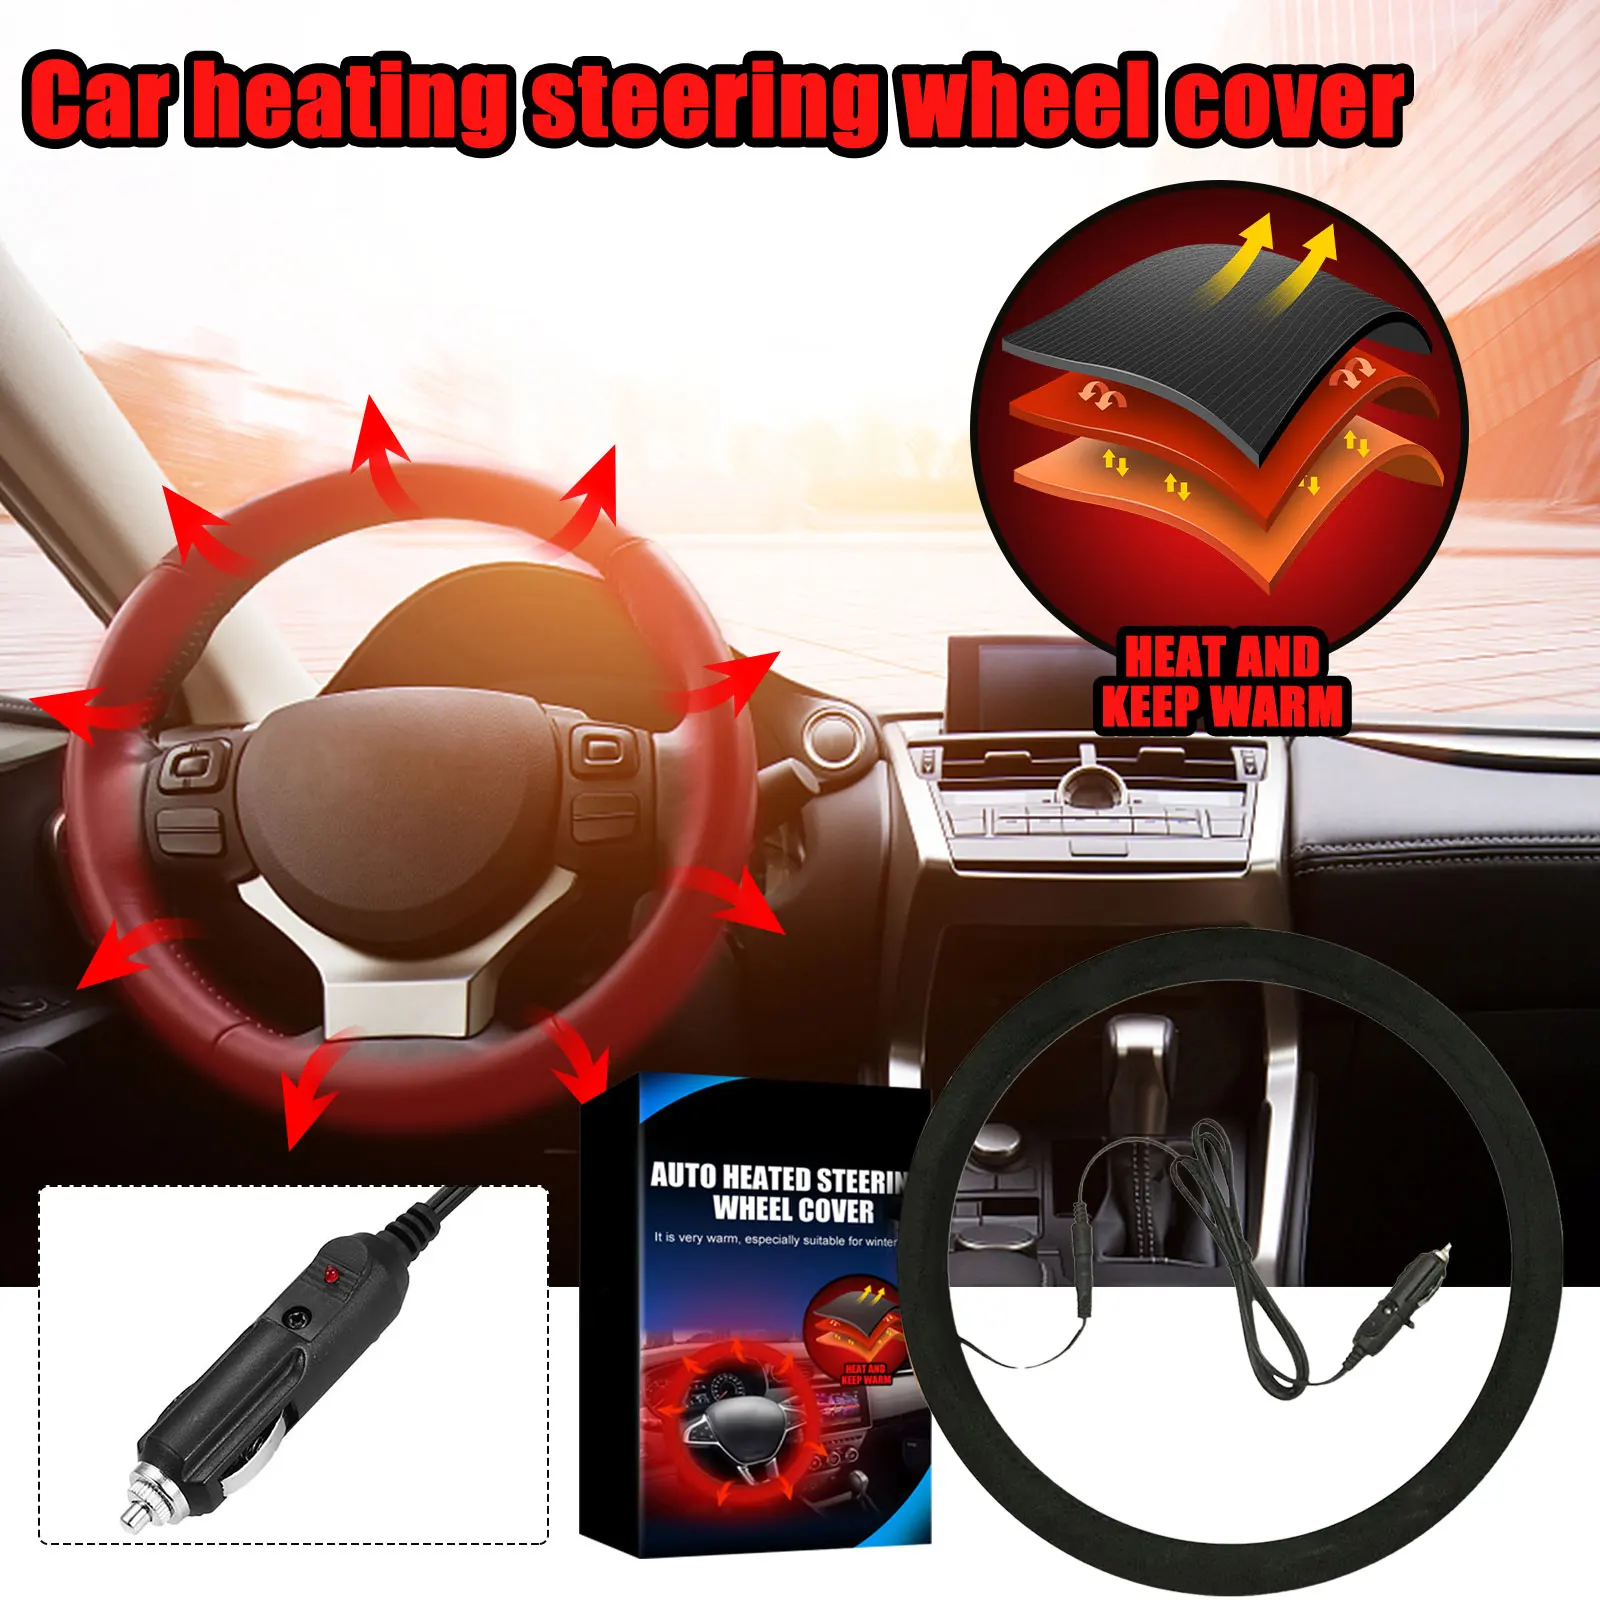 https://ae01.alicdn.com/kf/S26375fac801a4b7593d2549e8c399ea2U/Car-Heated-Steering-Wheel-Cover-Winter-Hand-Warmer-Auto-Heated-Steering-Wheel-Protector-Cover-Automobile-Accessories.jpg